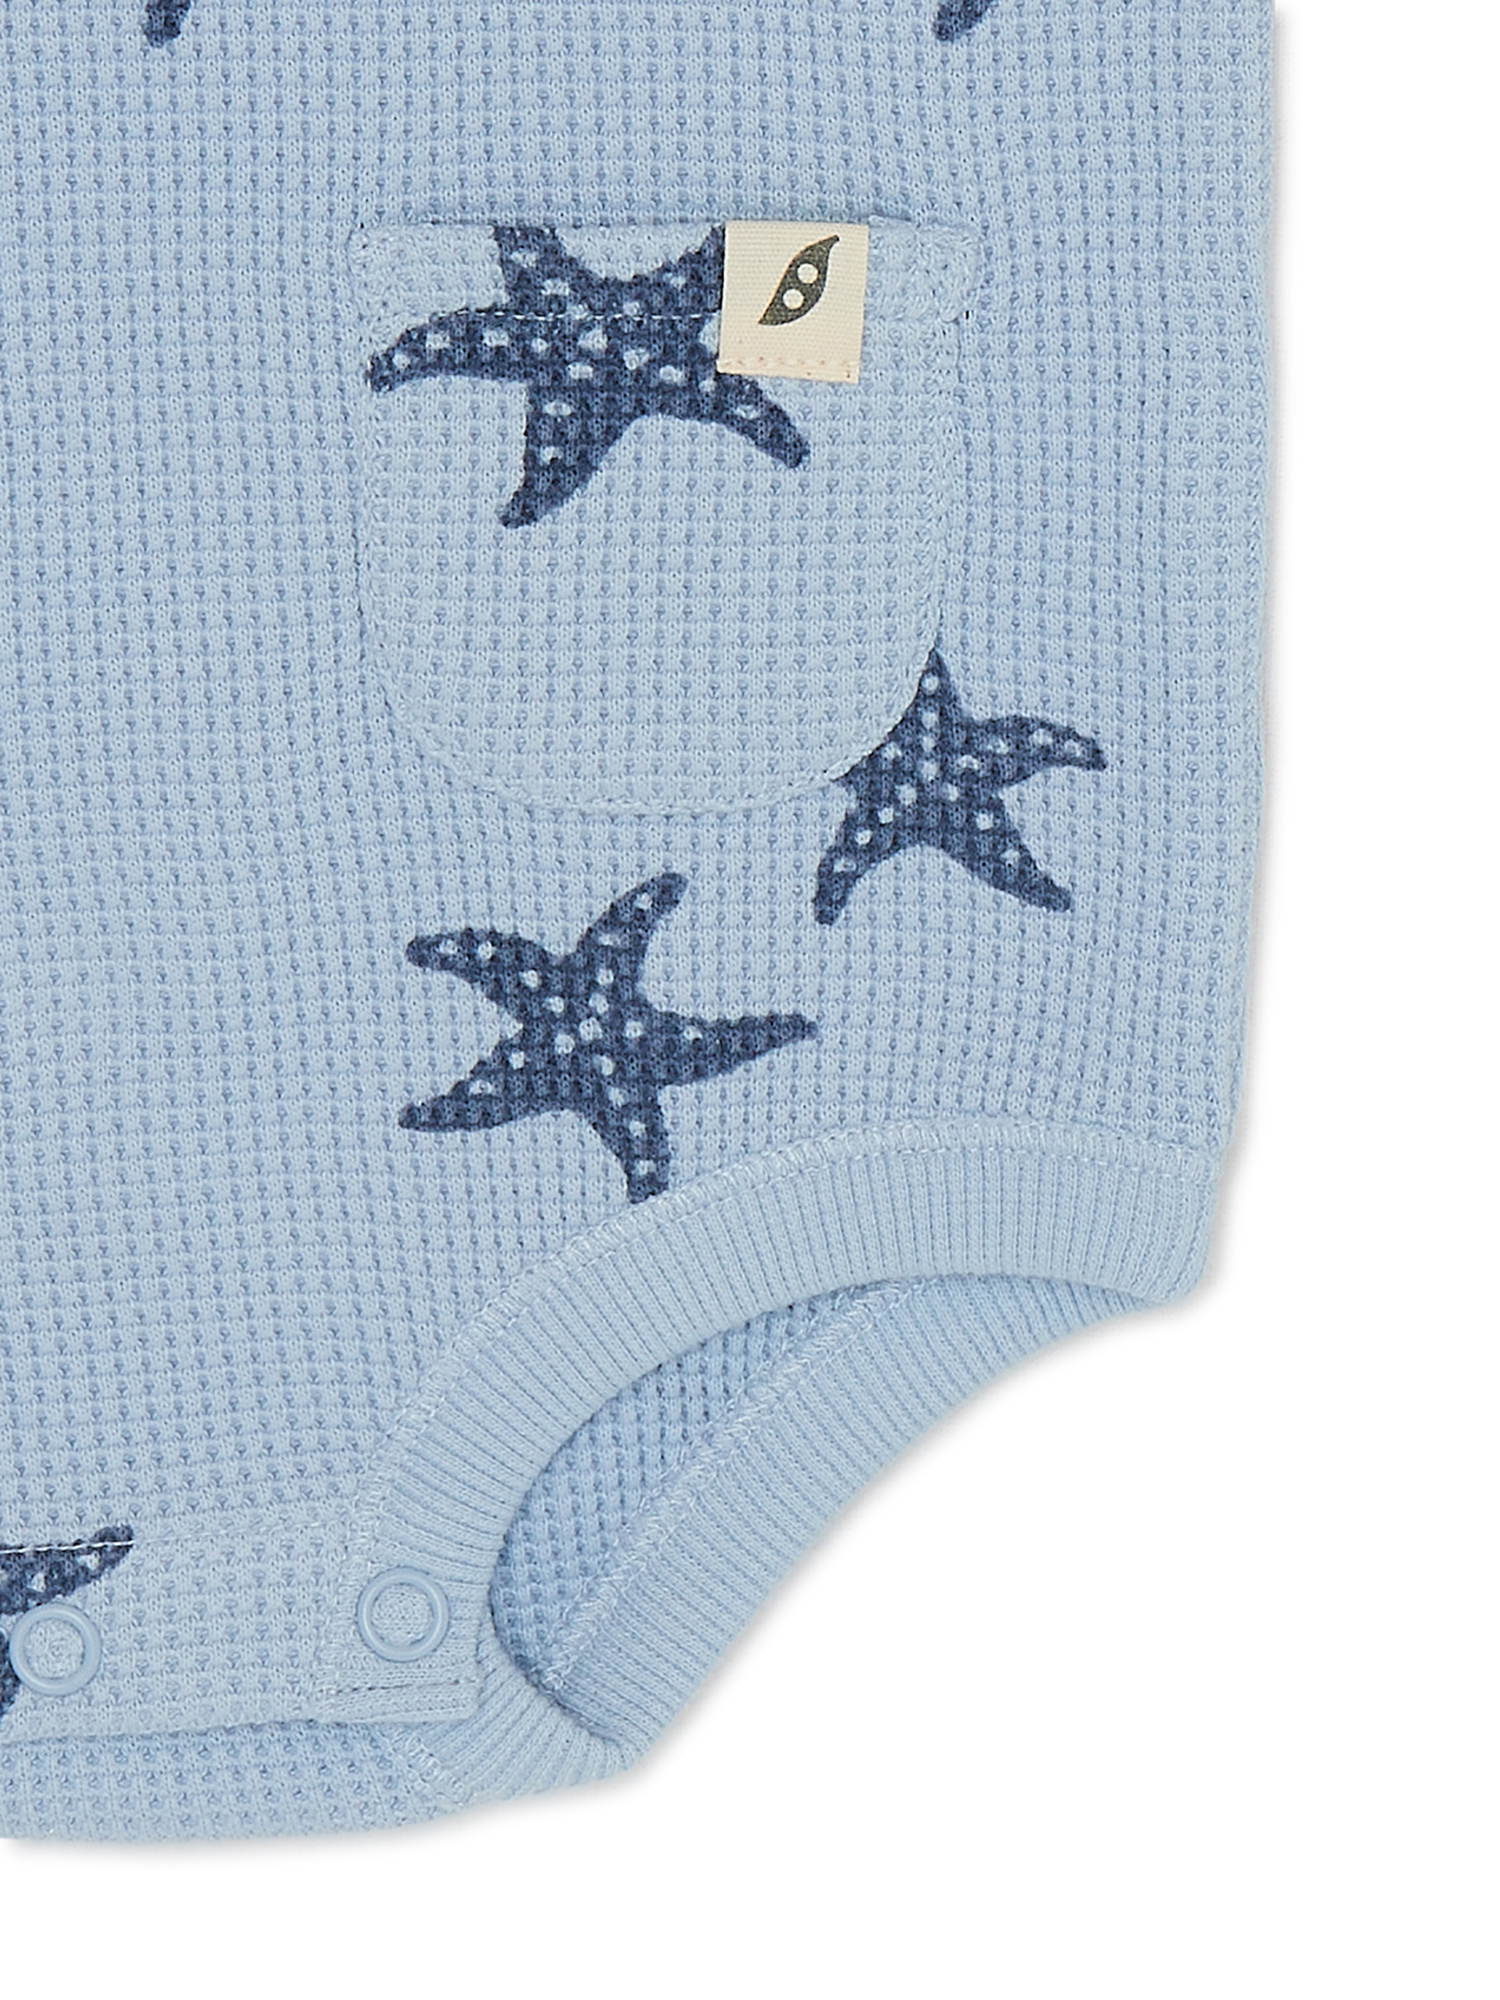 easy-peasy Baby Print Tank Bodysuit, Sizes 0-24 Months - image 2 of 4